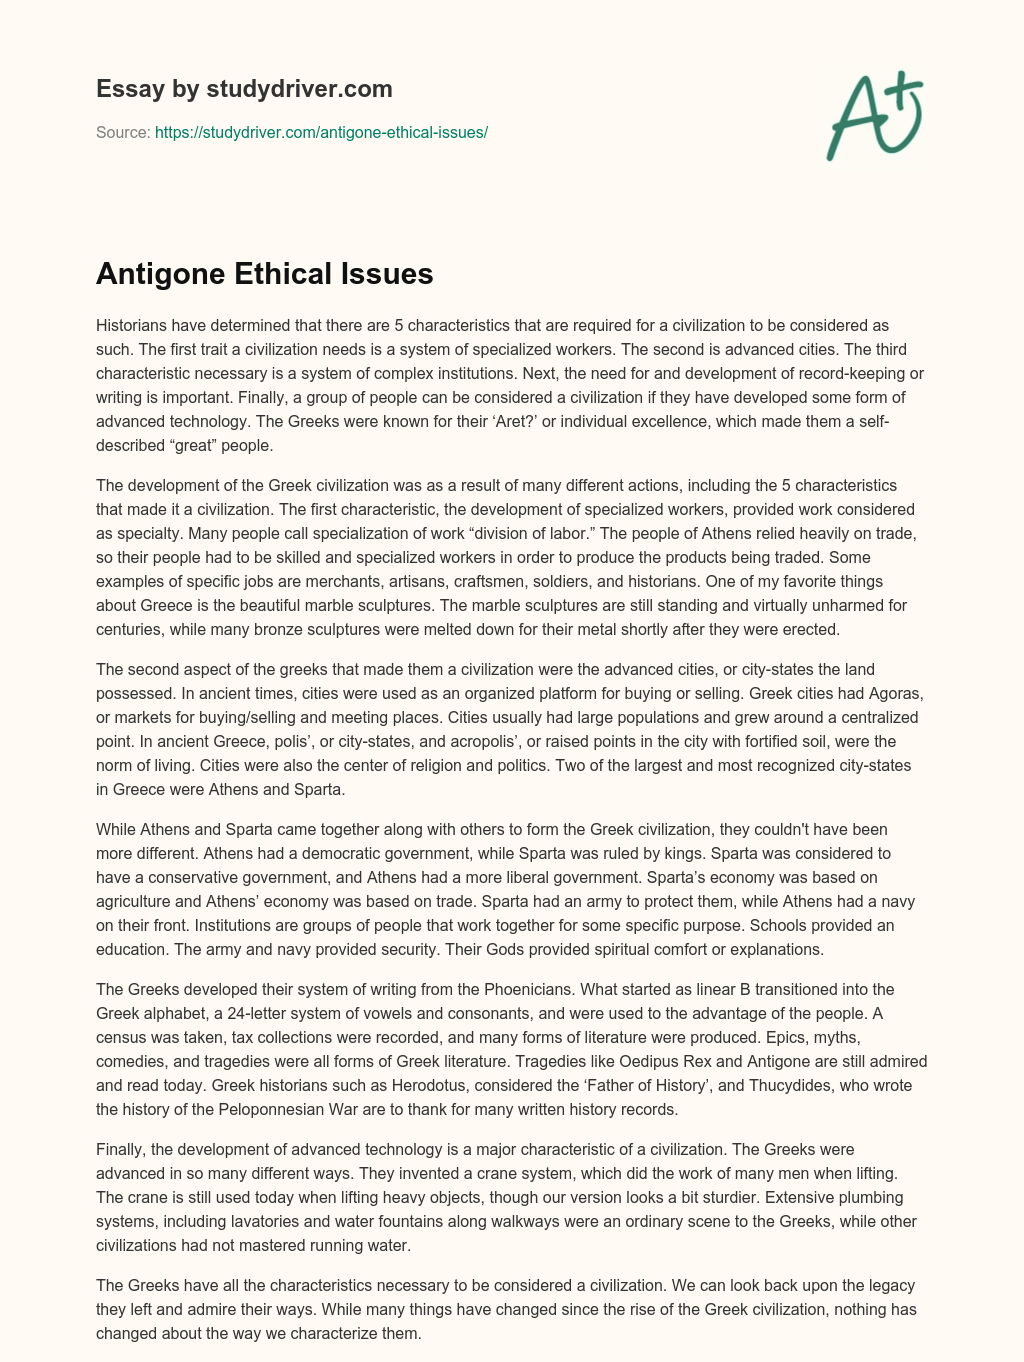 Antigone Ethical Issues essay